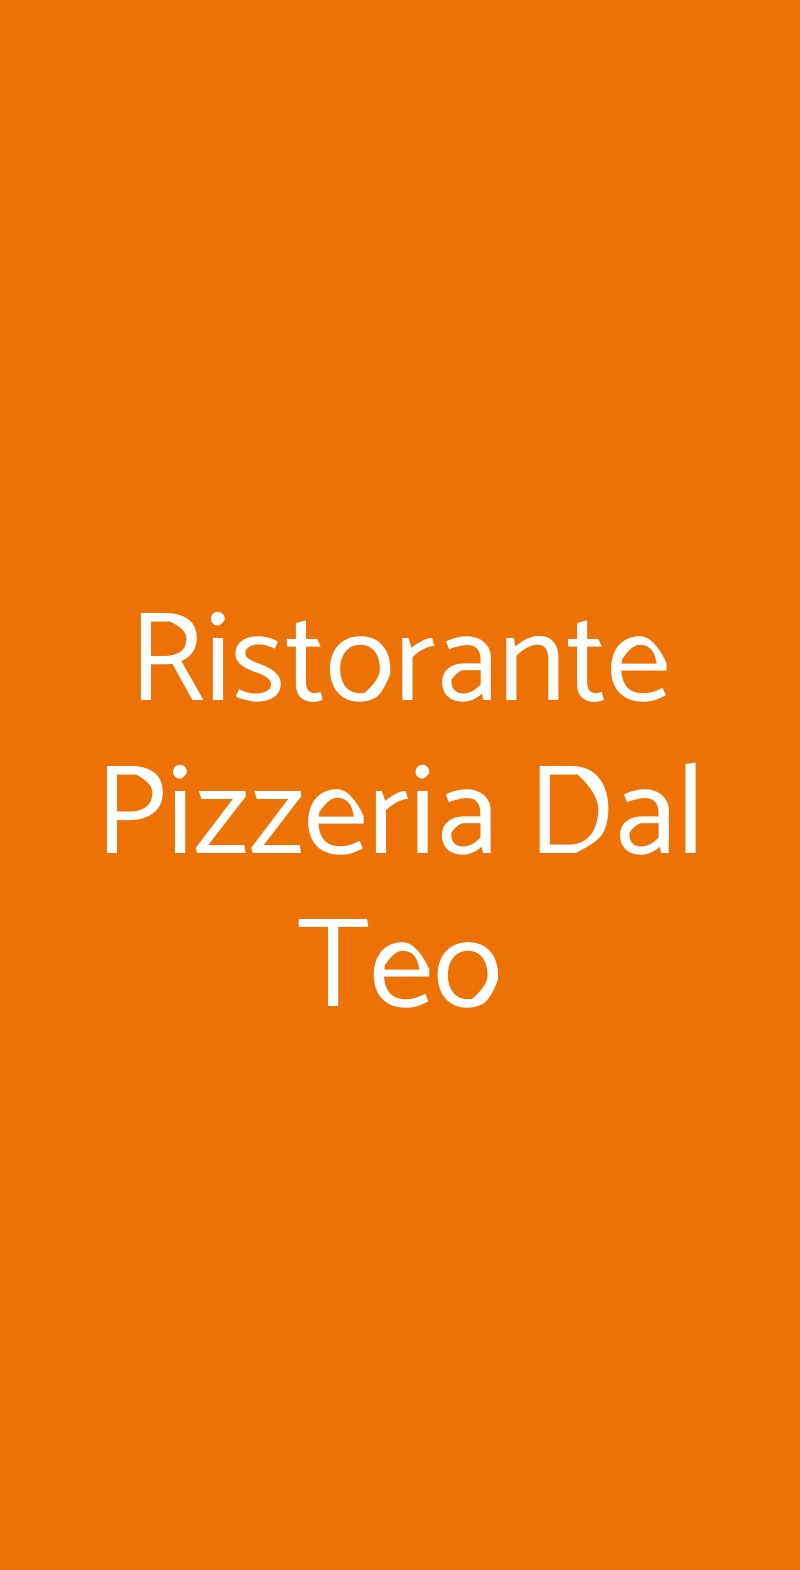 Ristorante Pizzeria Dal Teo Parma menù 1 pagina